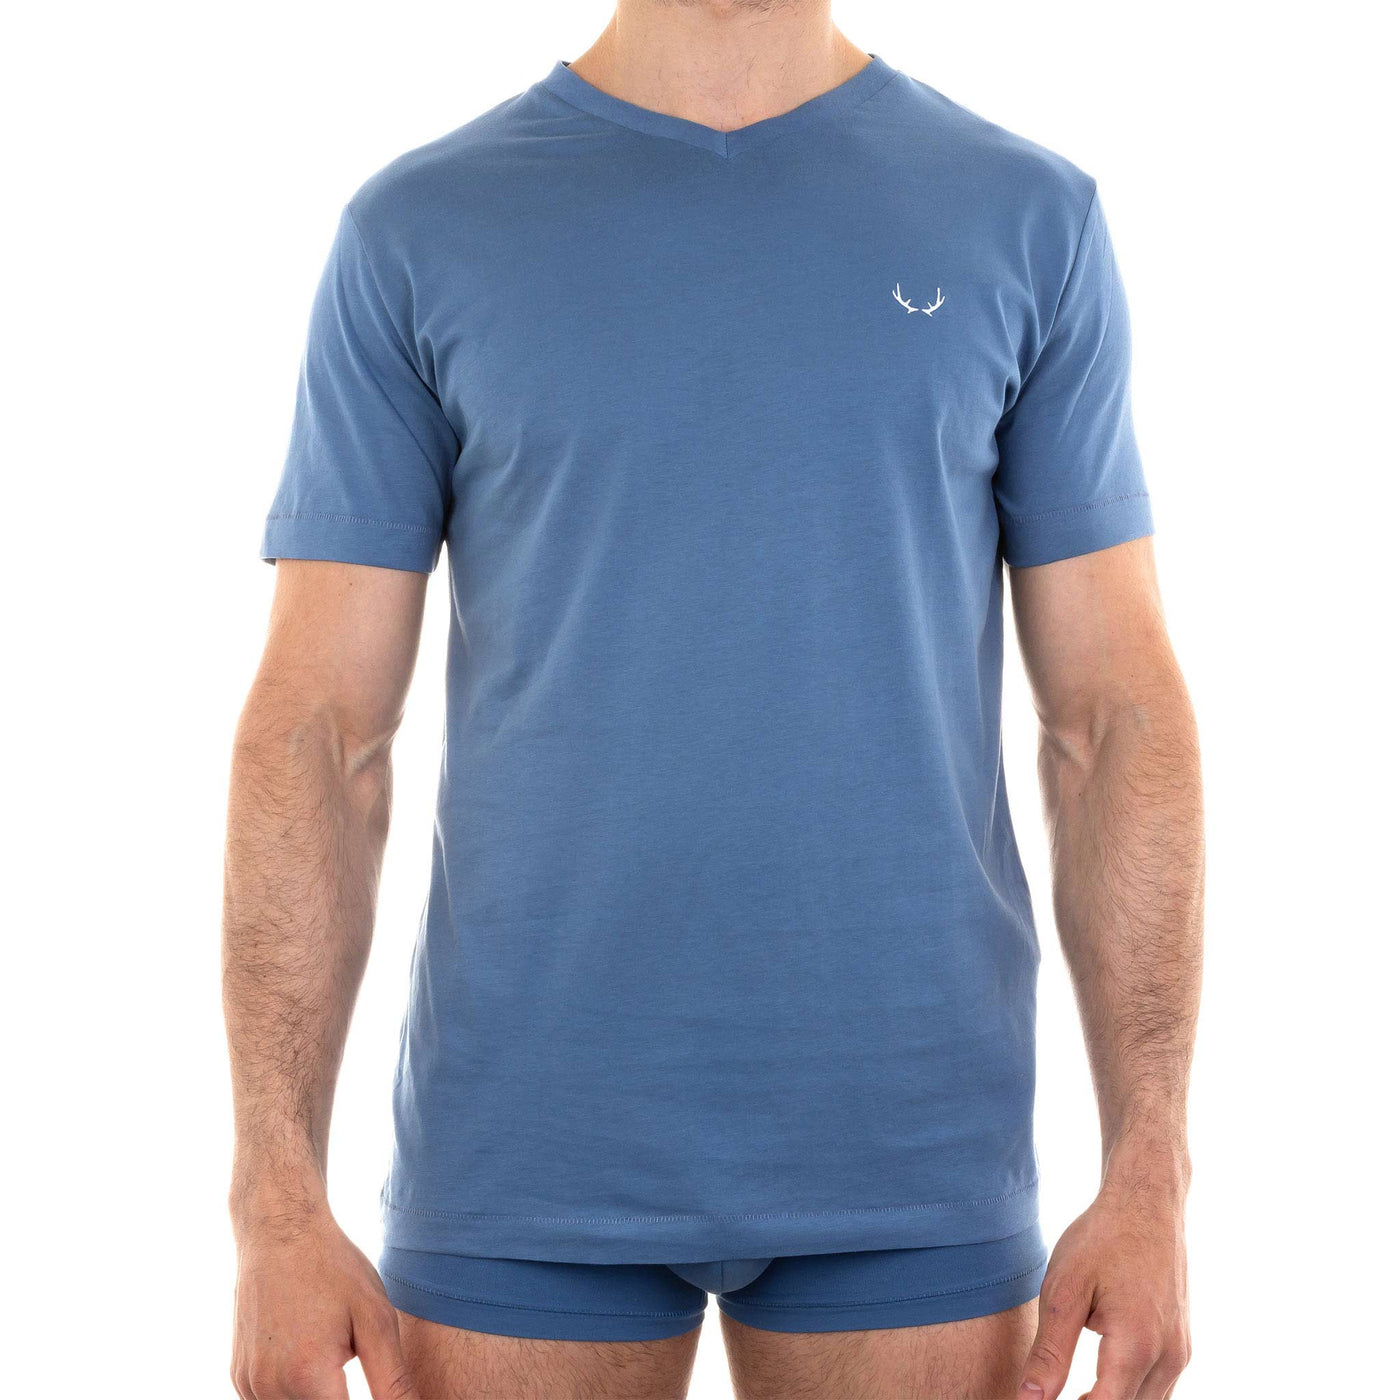 Moonlight blue v-neck organic cotton t-shirt for men